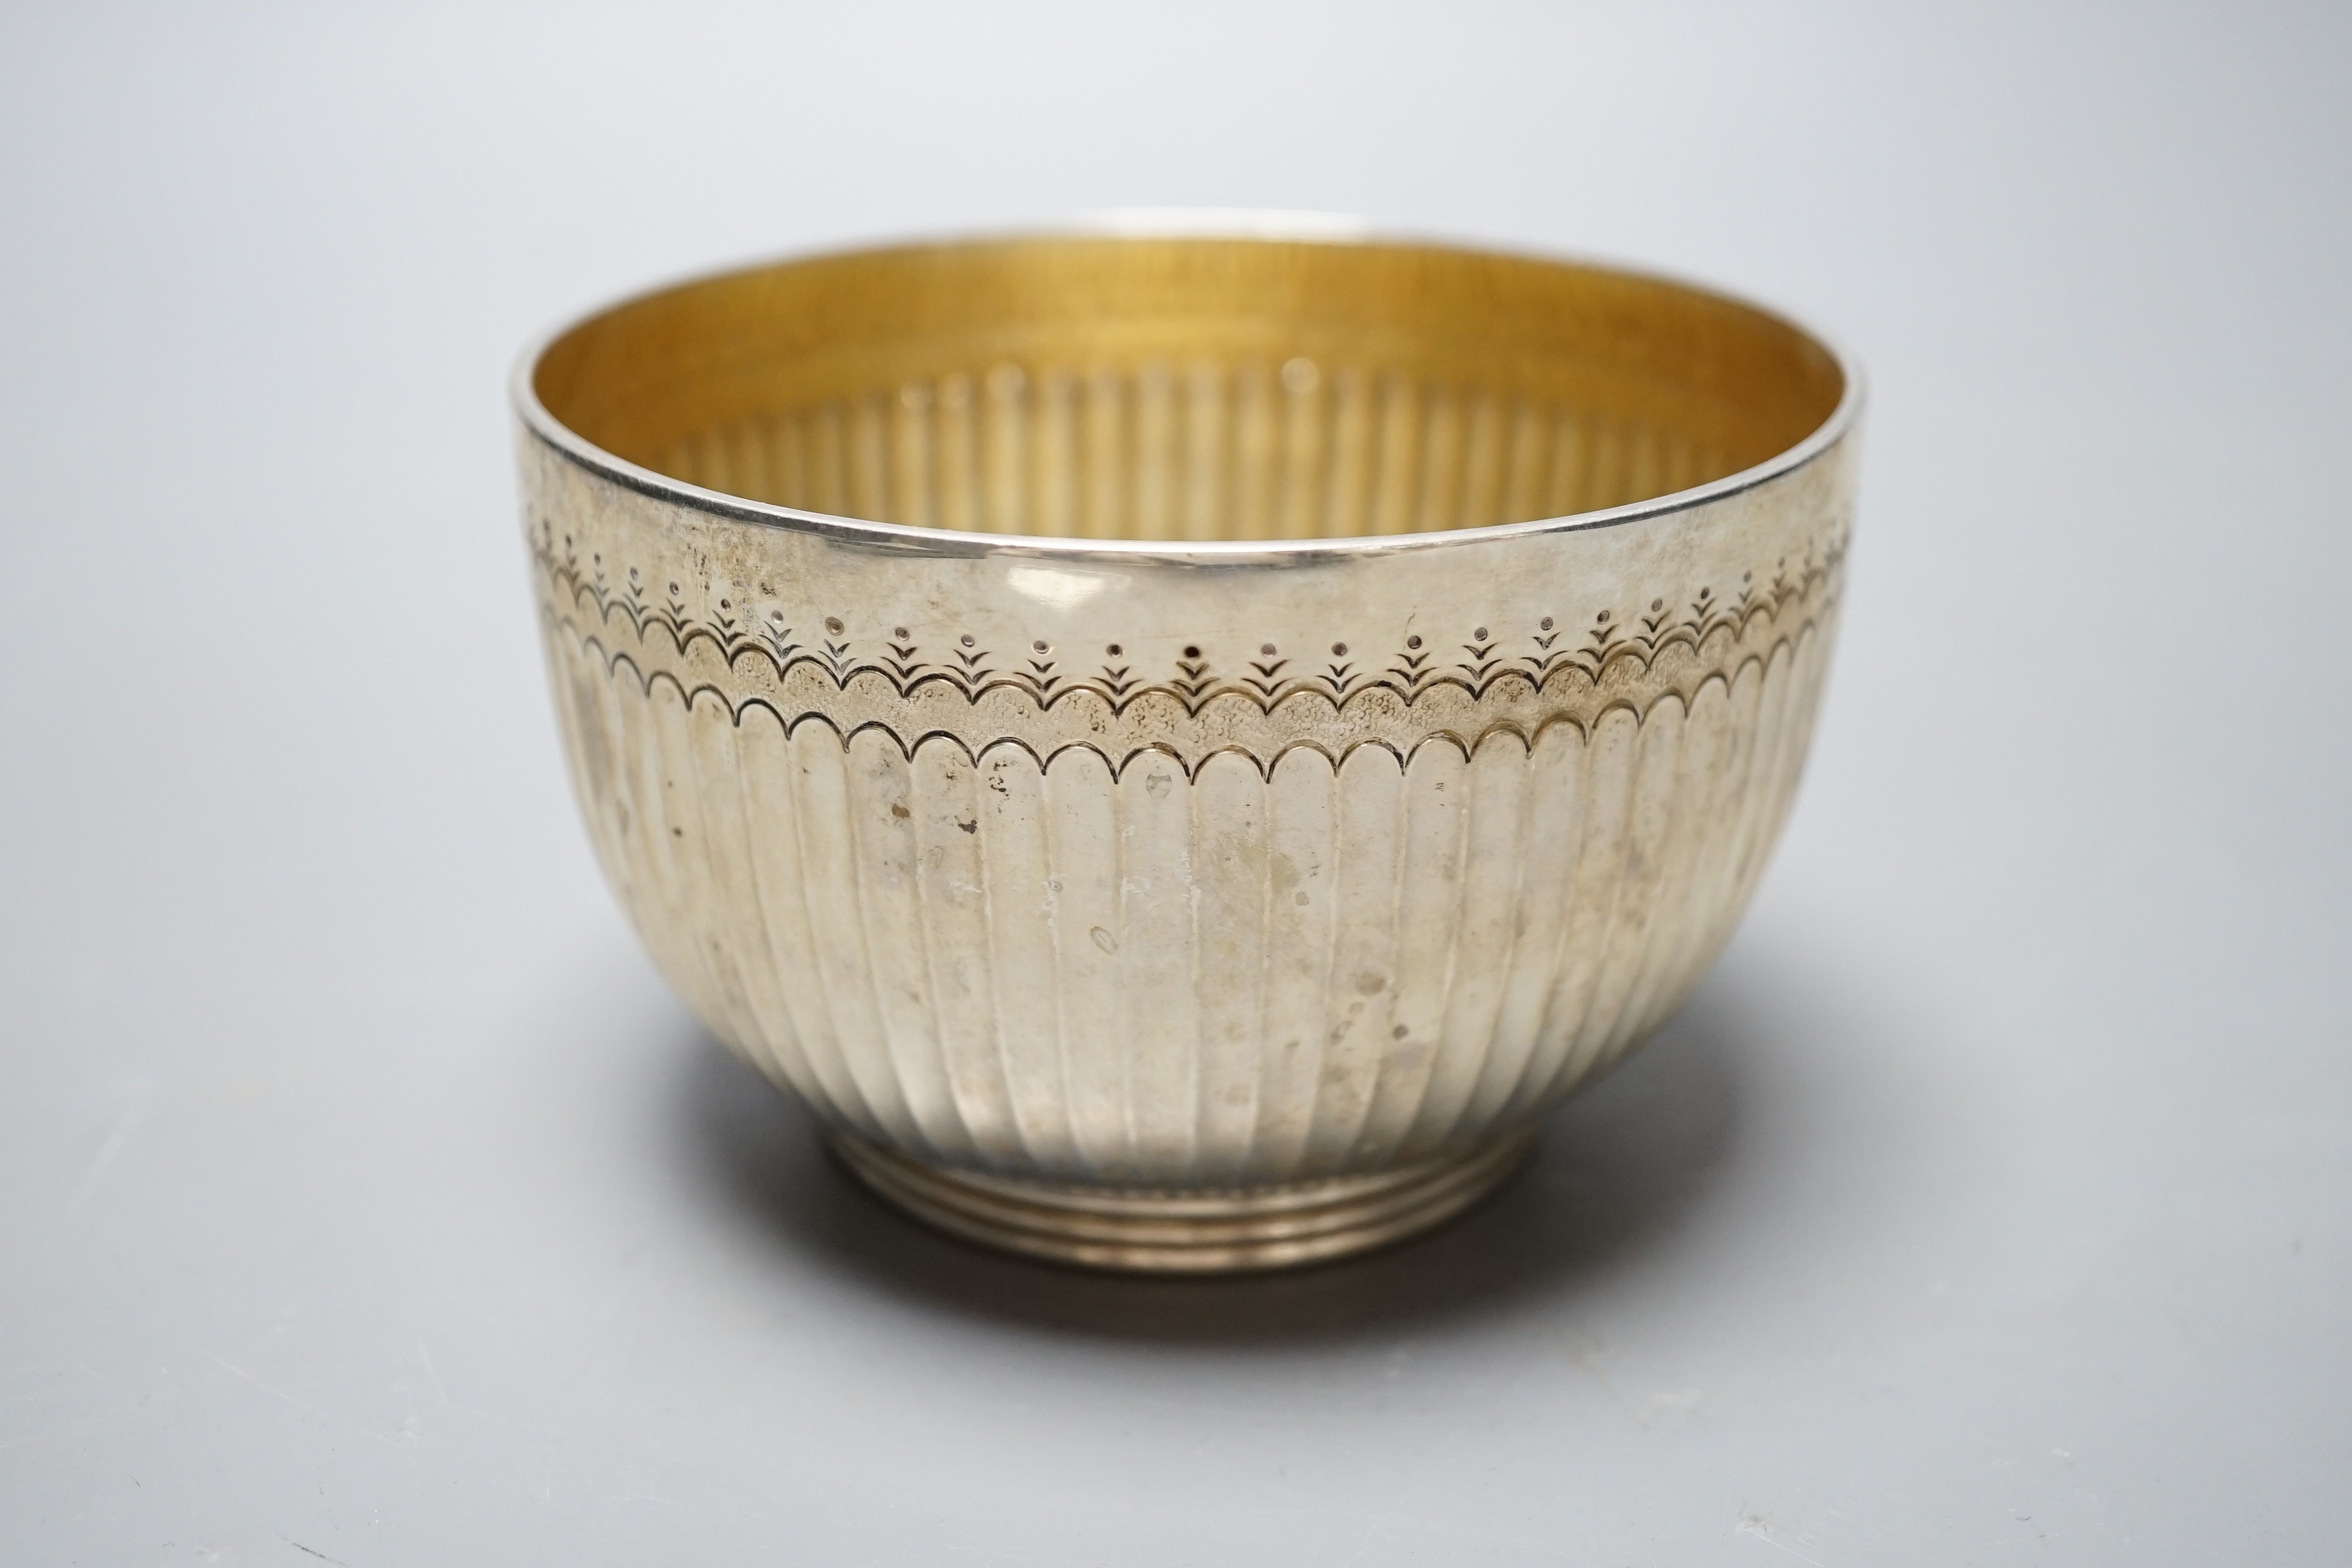 An Edwardian fluted silver sugar bowl, Thomas of New Bond Street, London, 1902, diameter 11.2cm, 8.9oz.